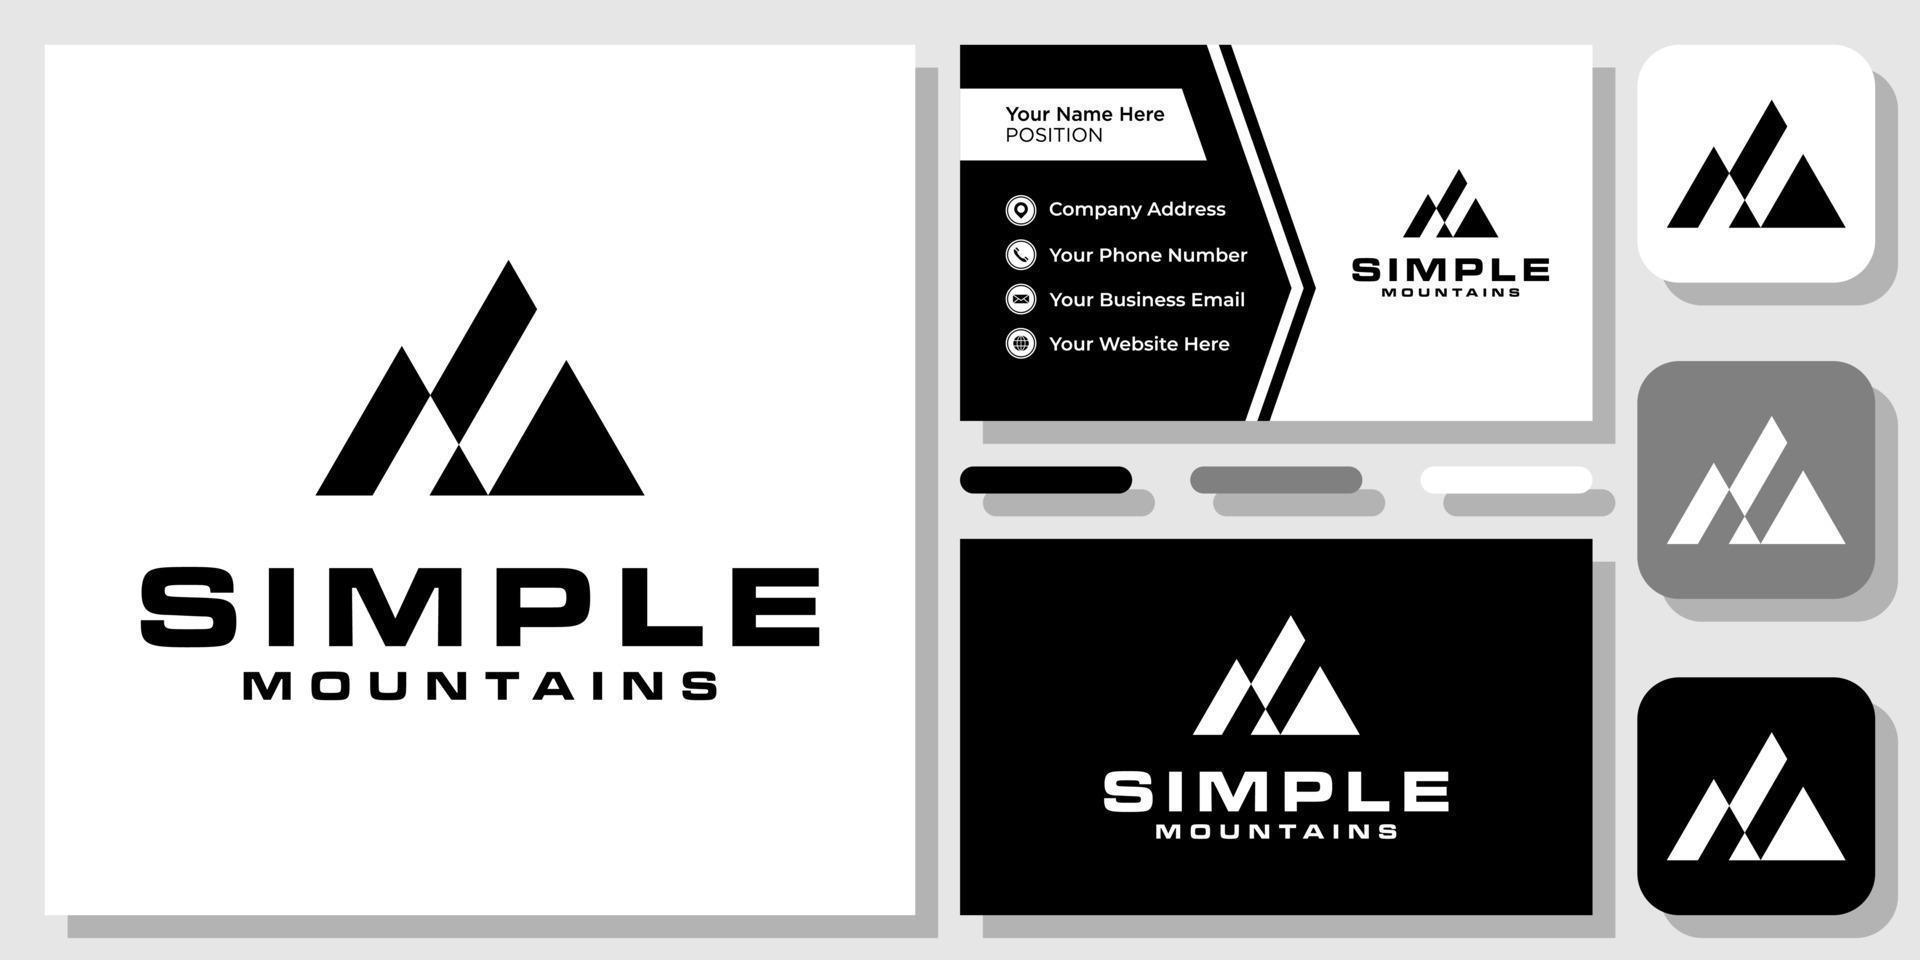 Simple Mountain Peak Adventure Vector Logo Design with Business Card